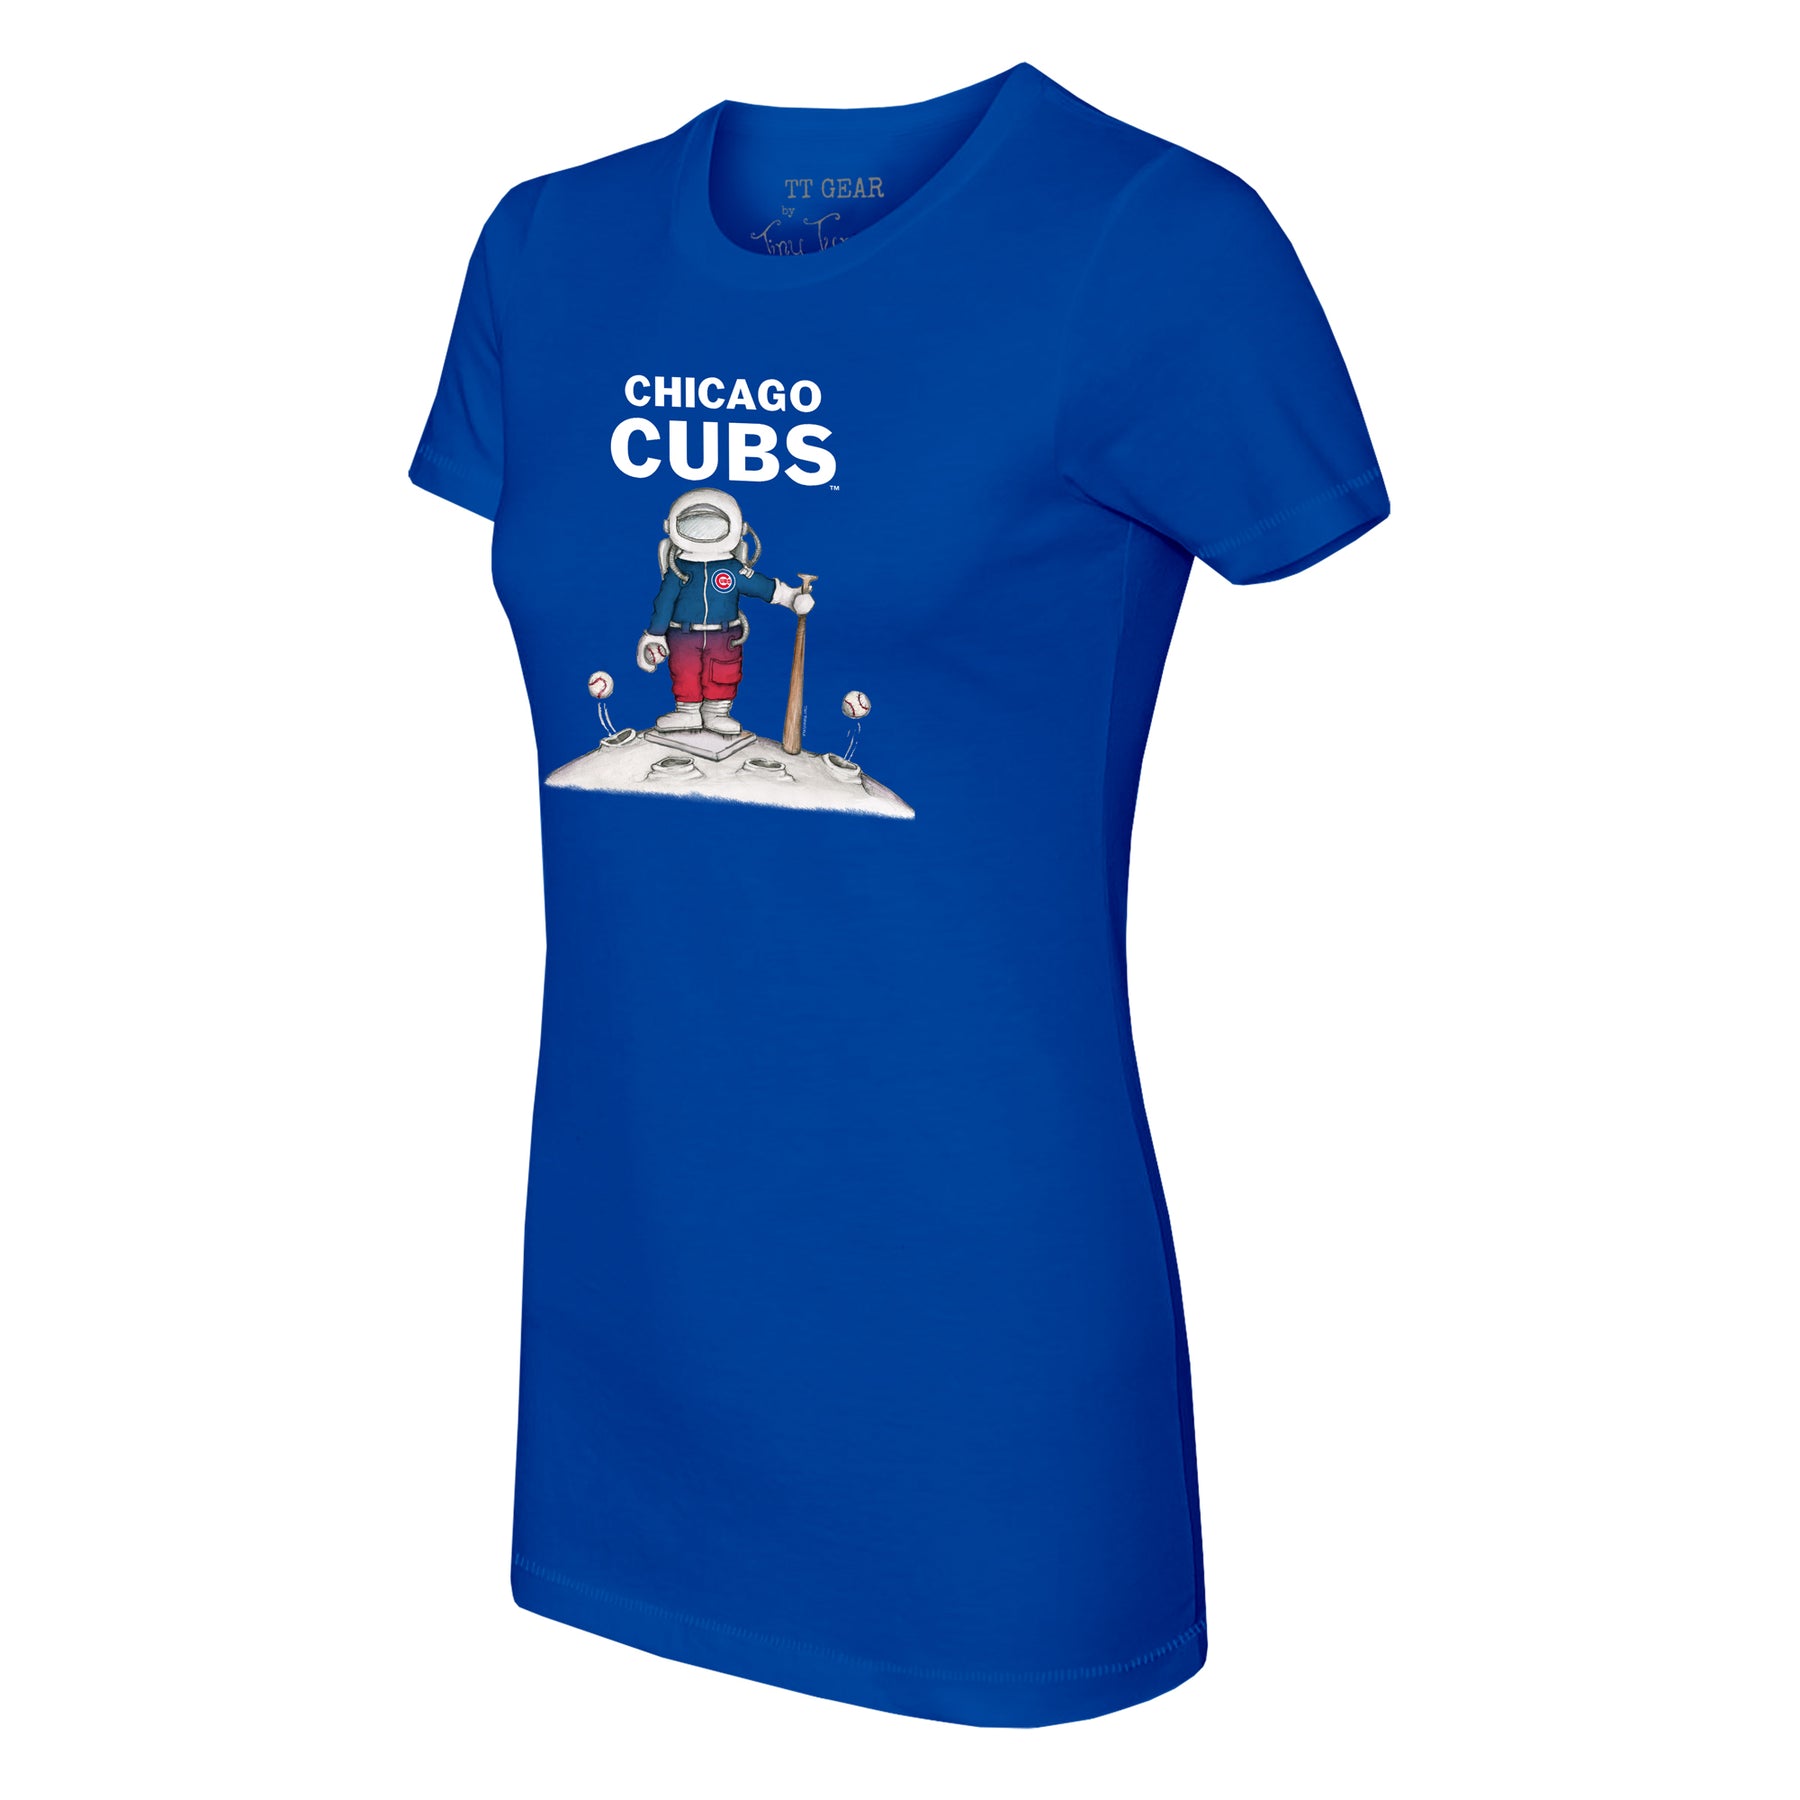 Chicago Cubs Astronaut Tee Shirt